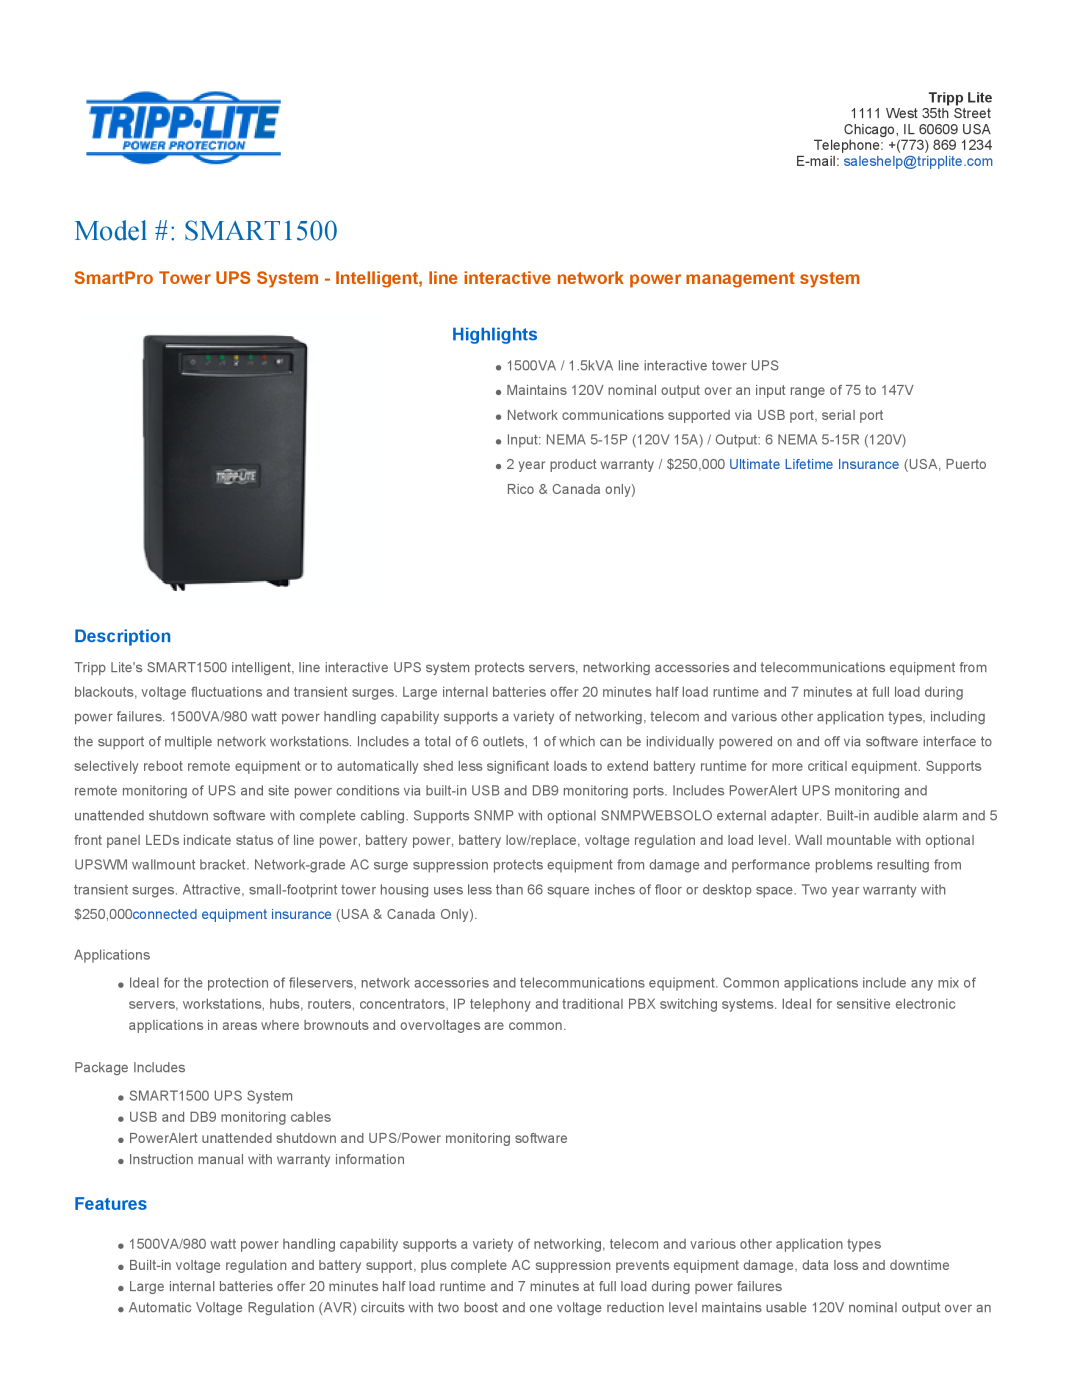 Tripp Lite warranty Highlights, Description, Features, Model # SMART1500 